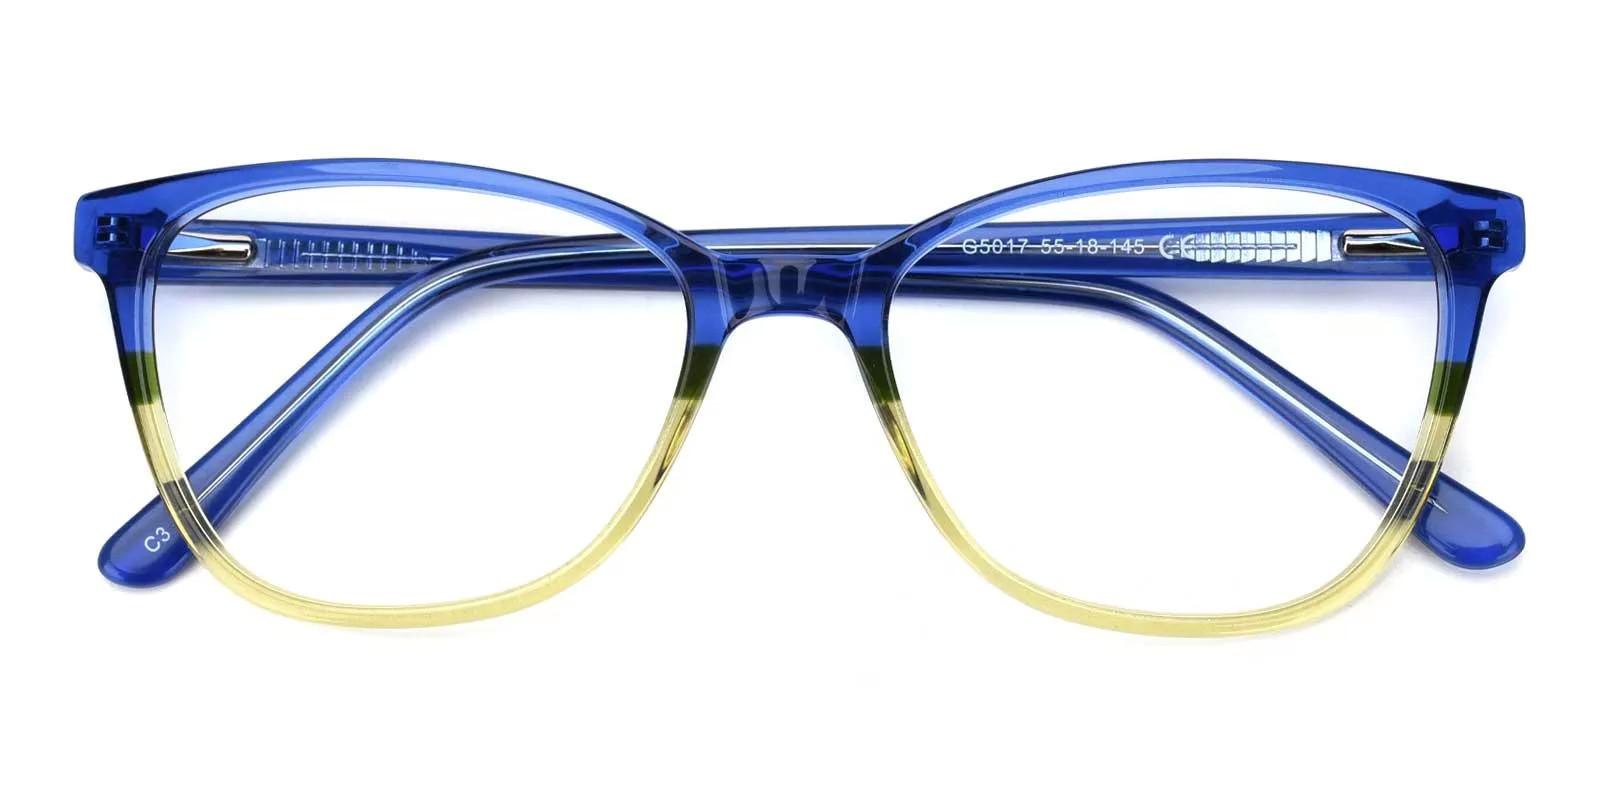 Rosemary Blue Acetate Eyeglasses , Fashion , SpringHinges , UniversalBridgeFit Frames from ABBE Glasses